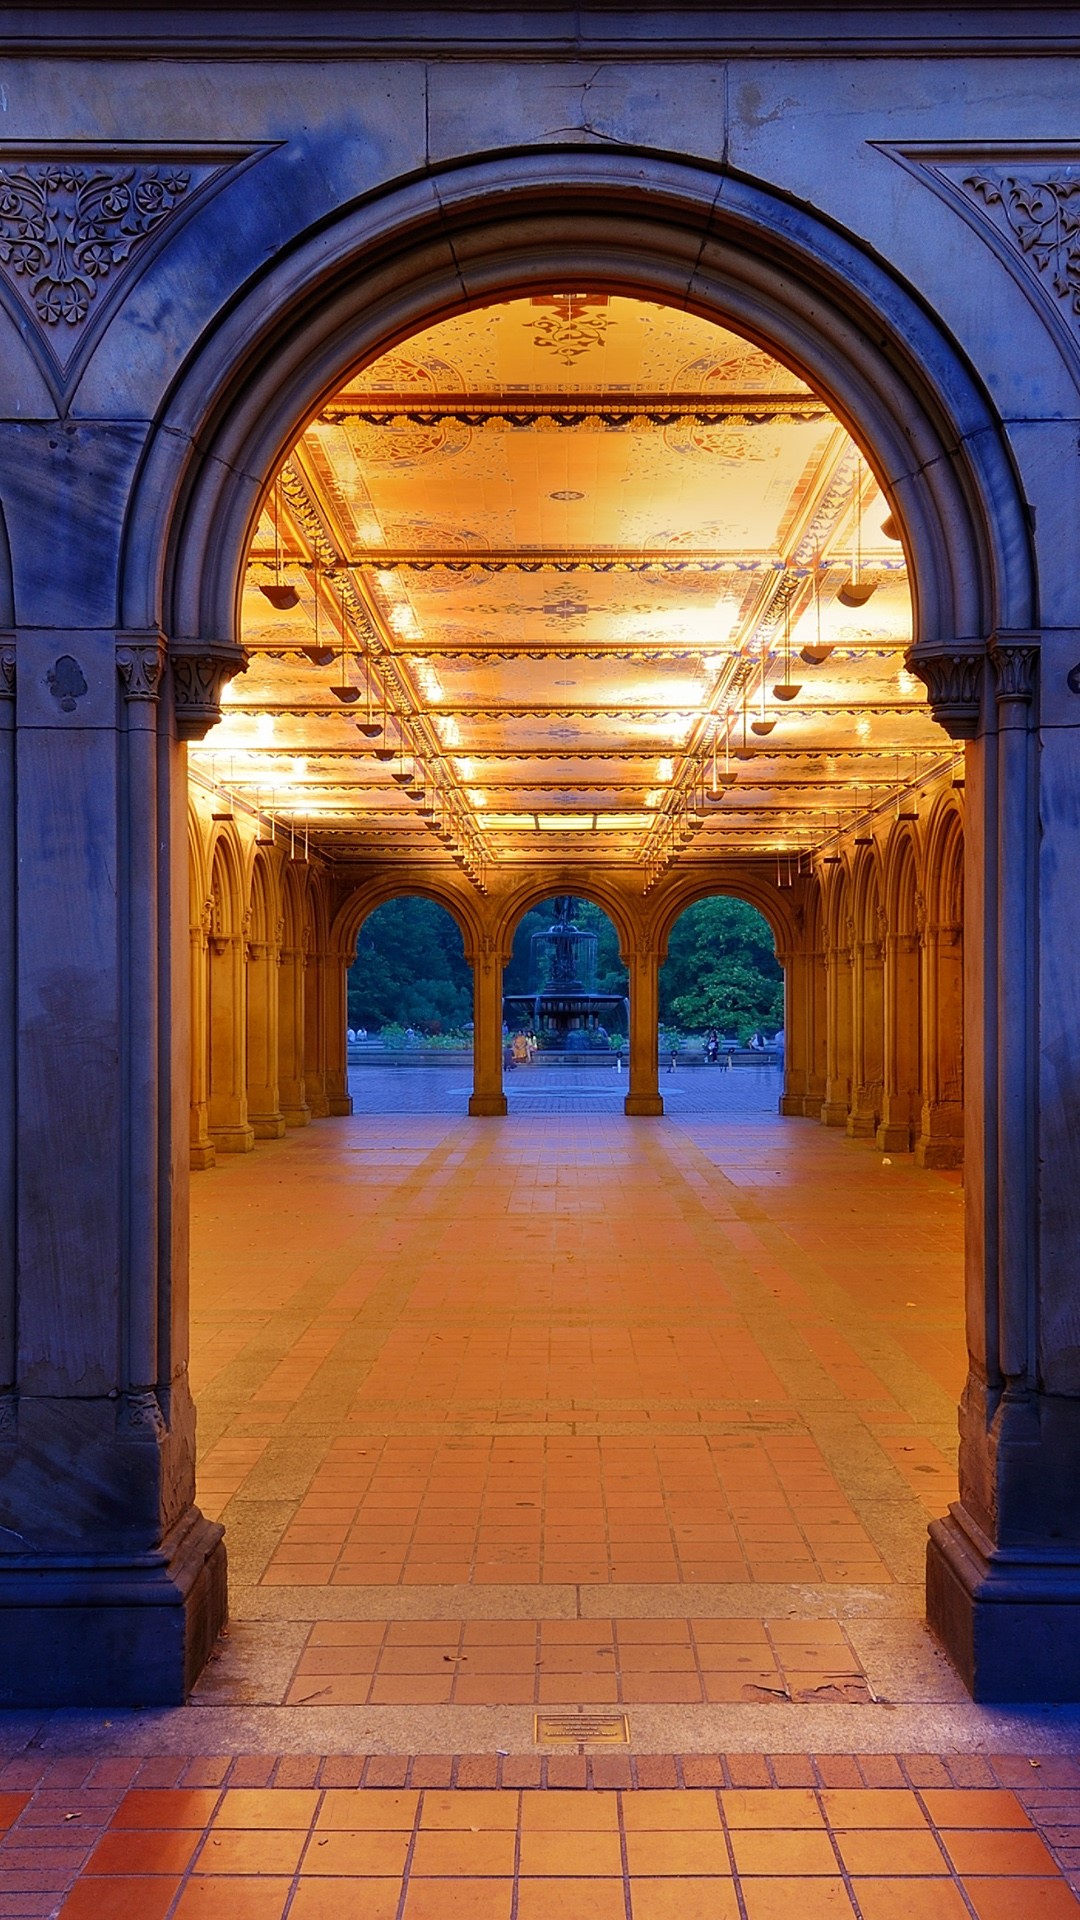 Bethesda Terrace Arch Bridge in Central Park, New York Cit…